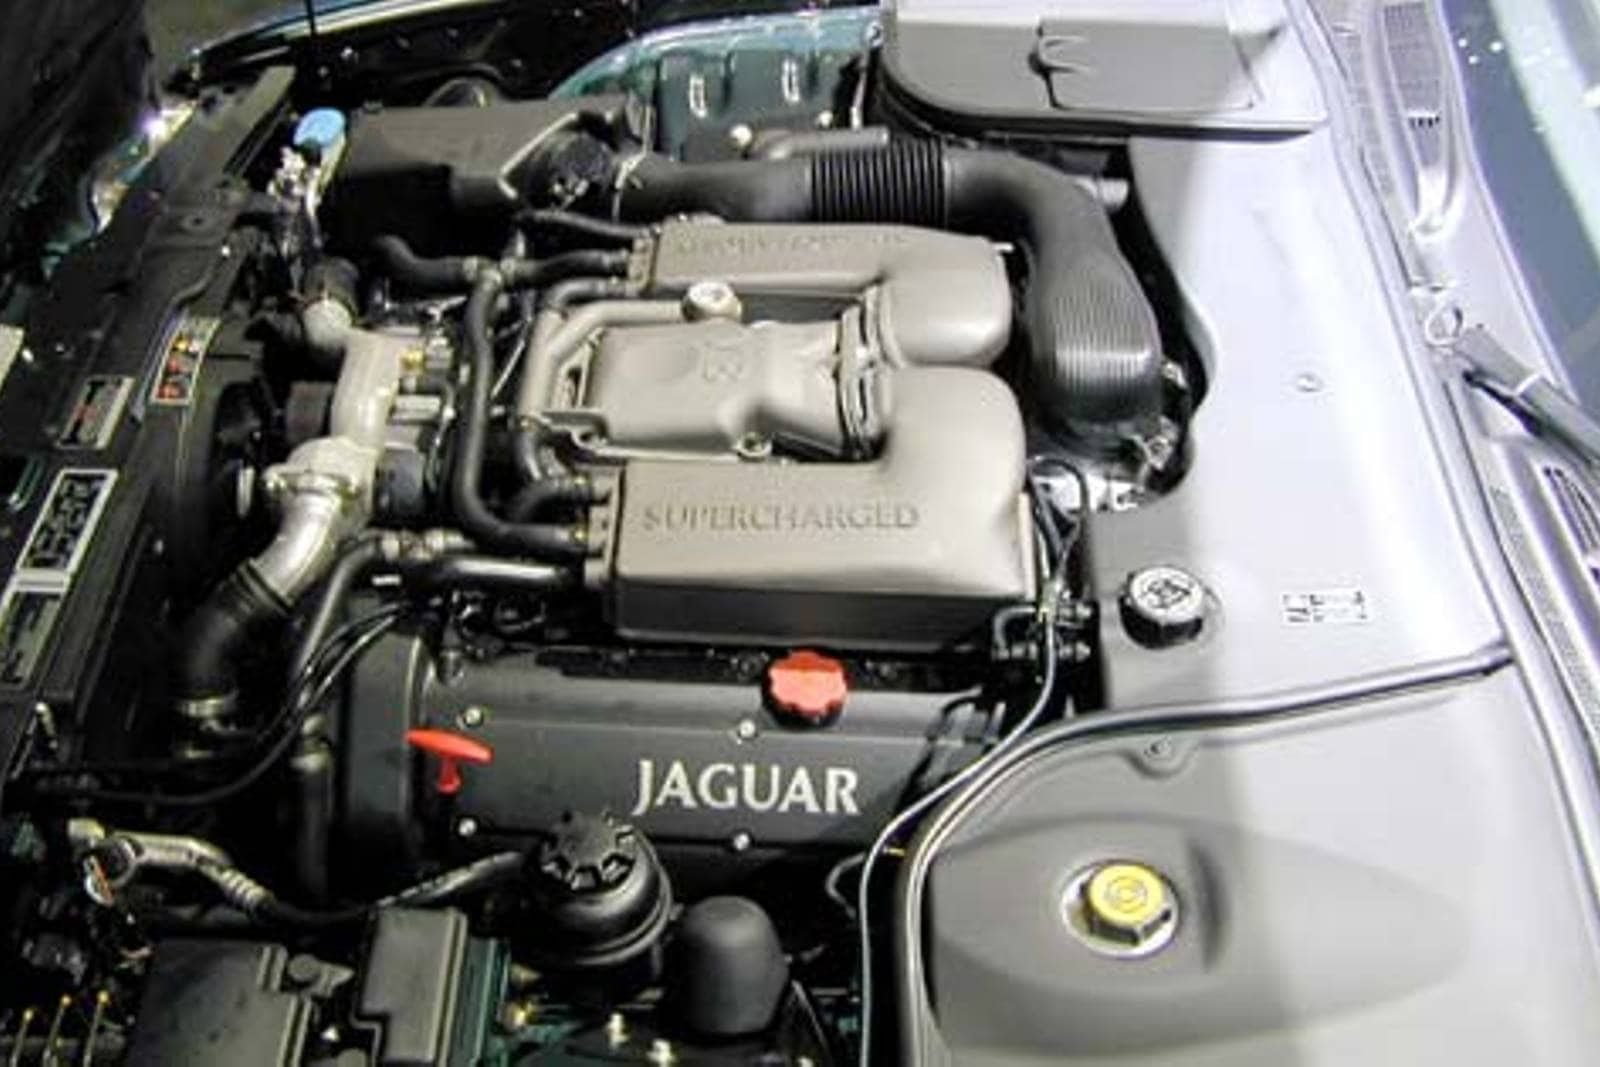 2002 Jaguar XKR - 2002 Jaguar XKR Convertible, metal Anthracite Black Exterior, black Leather interior - Used - VIN SAJDA42B32PA26563 - 61,000 Miles - 8 cyl - 2WD - Automatic - Convertible - Black - Miami, Fl, Usa, FL 33178, United States